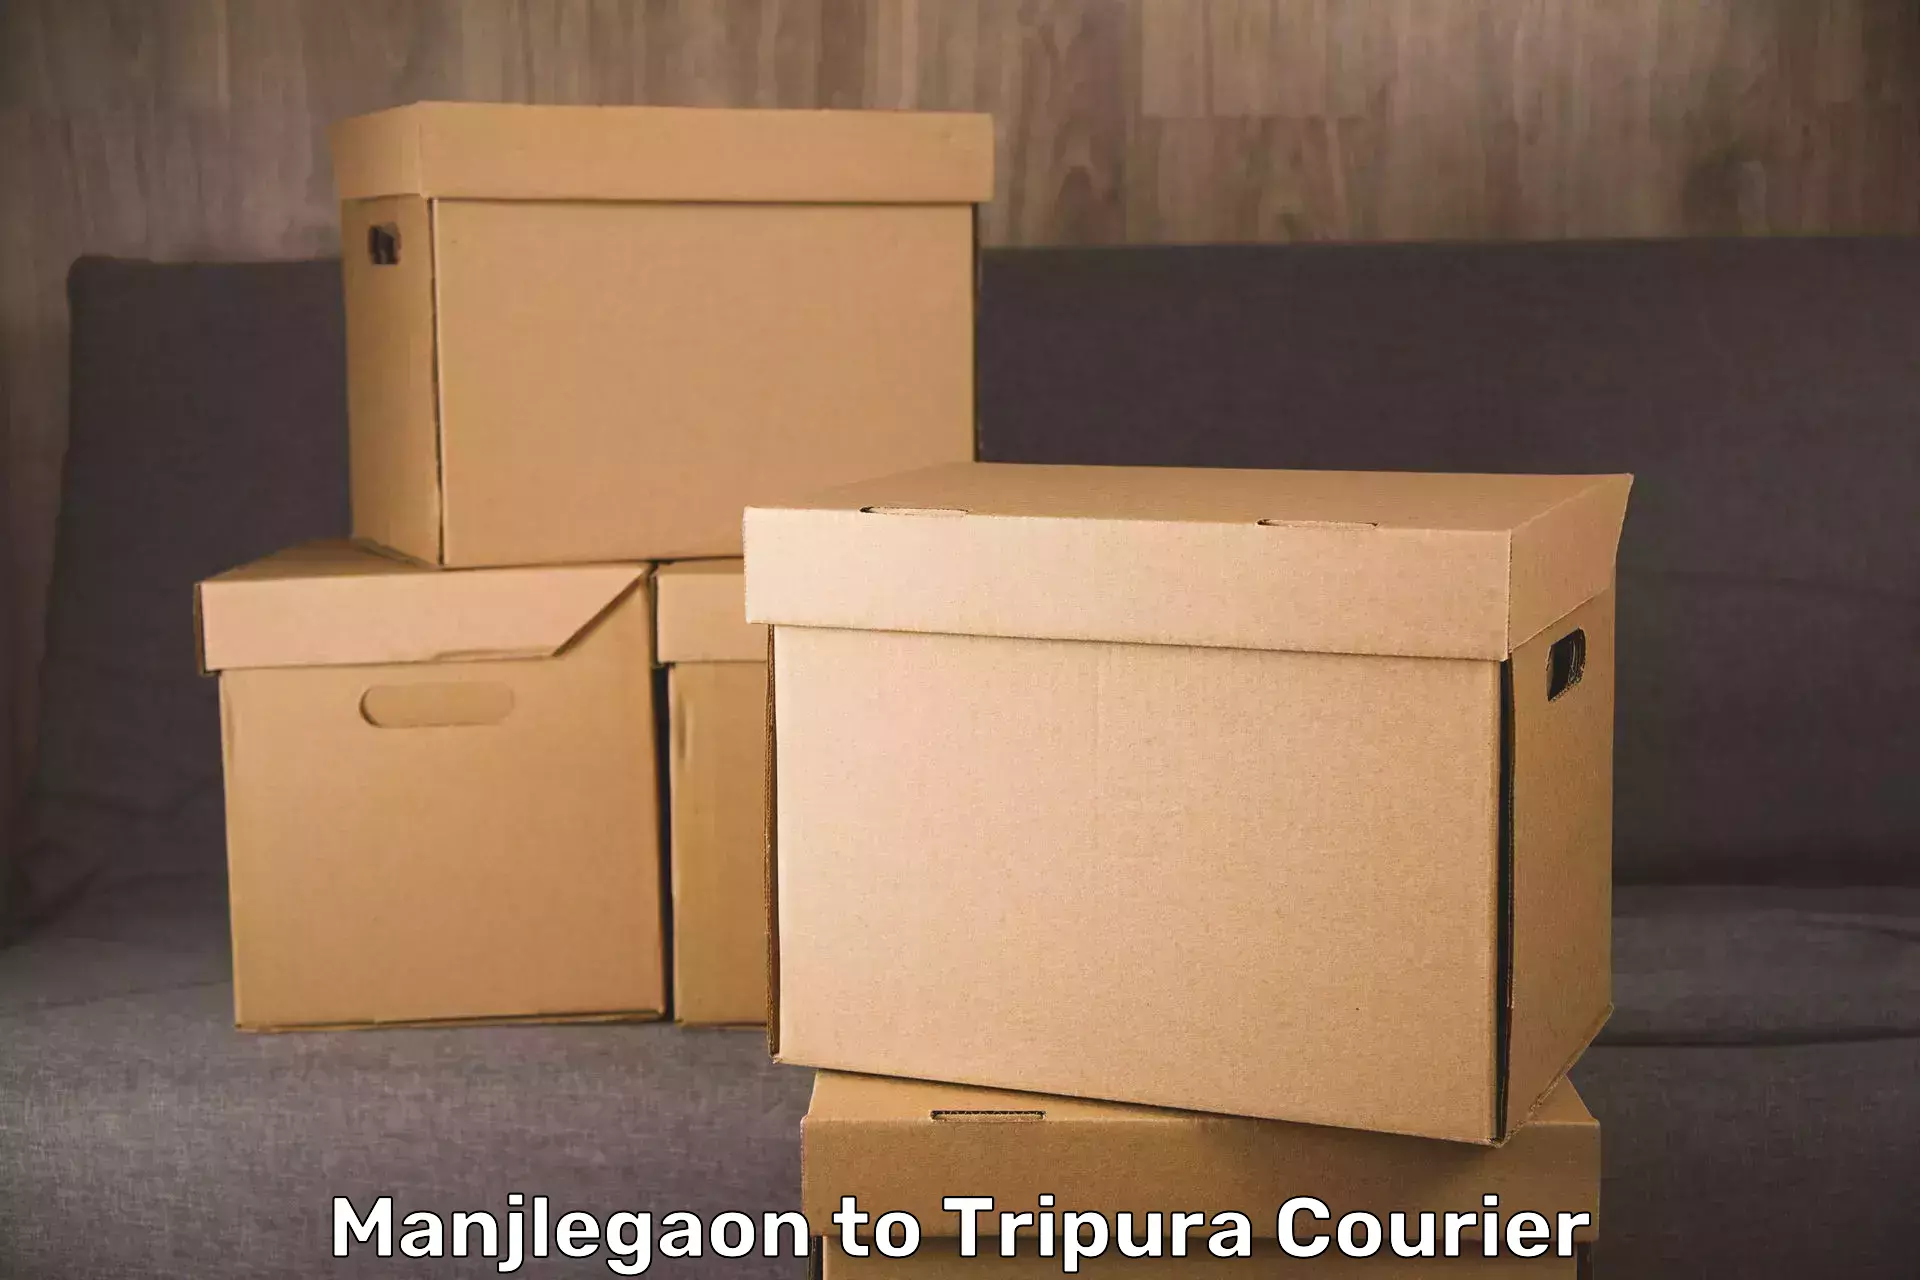 Luggage delivery system Manjlegaon to Tripura